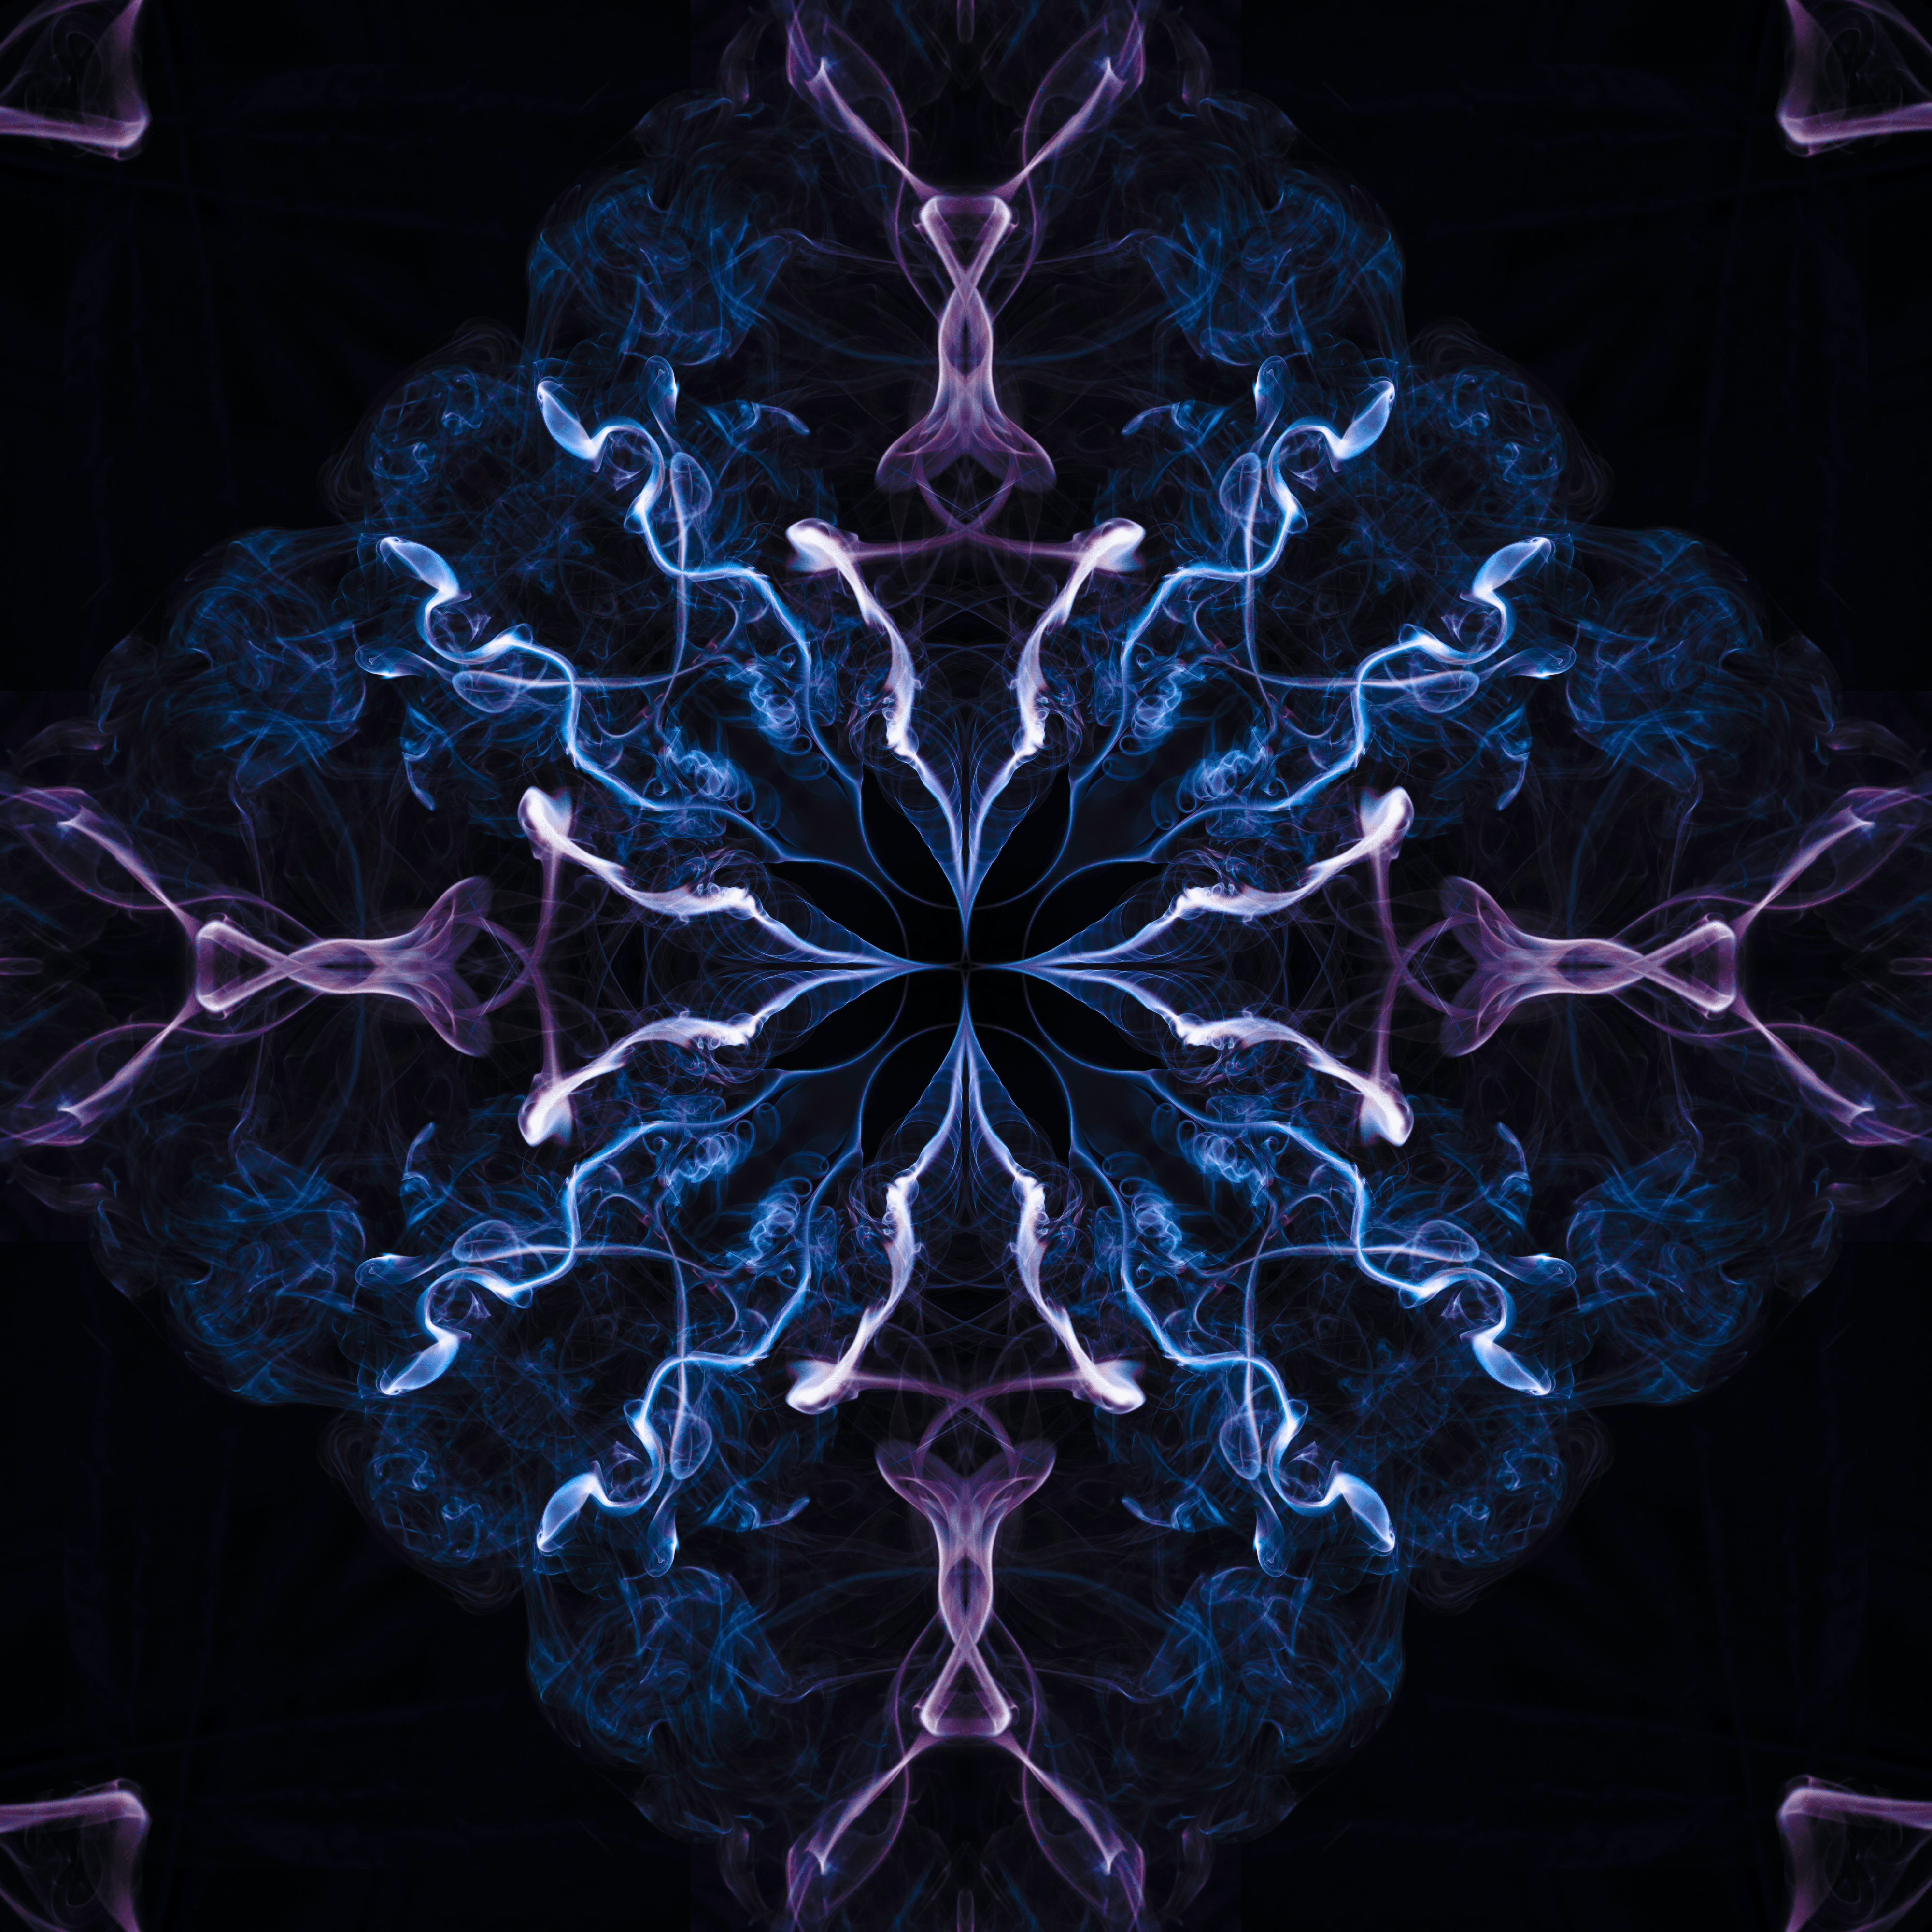 4977 - Ultraviolet Coral abstract smoke art